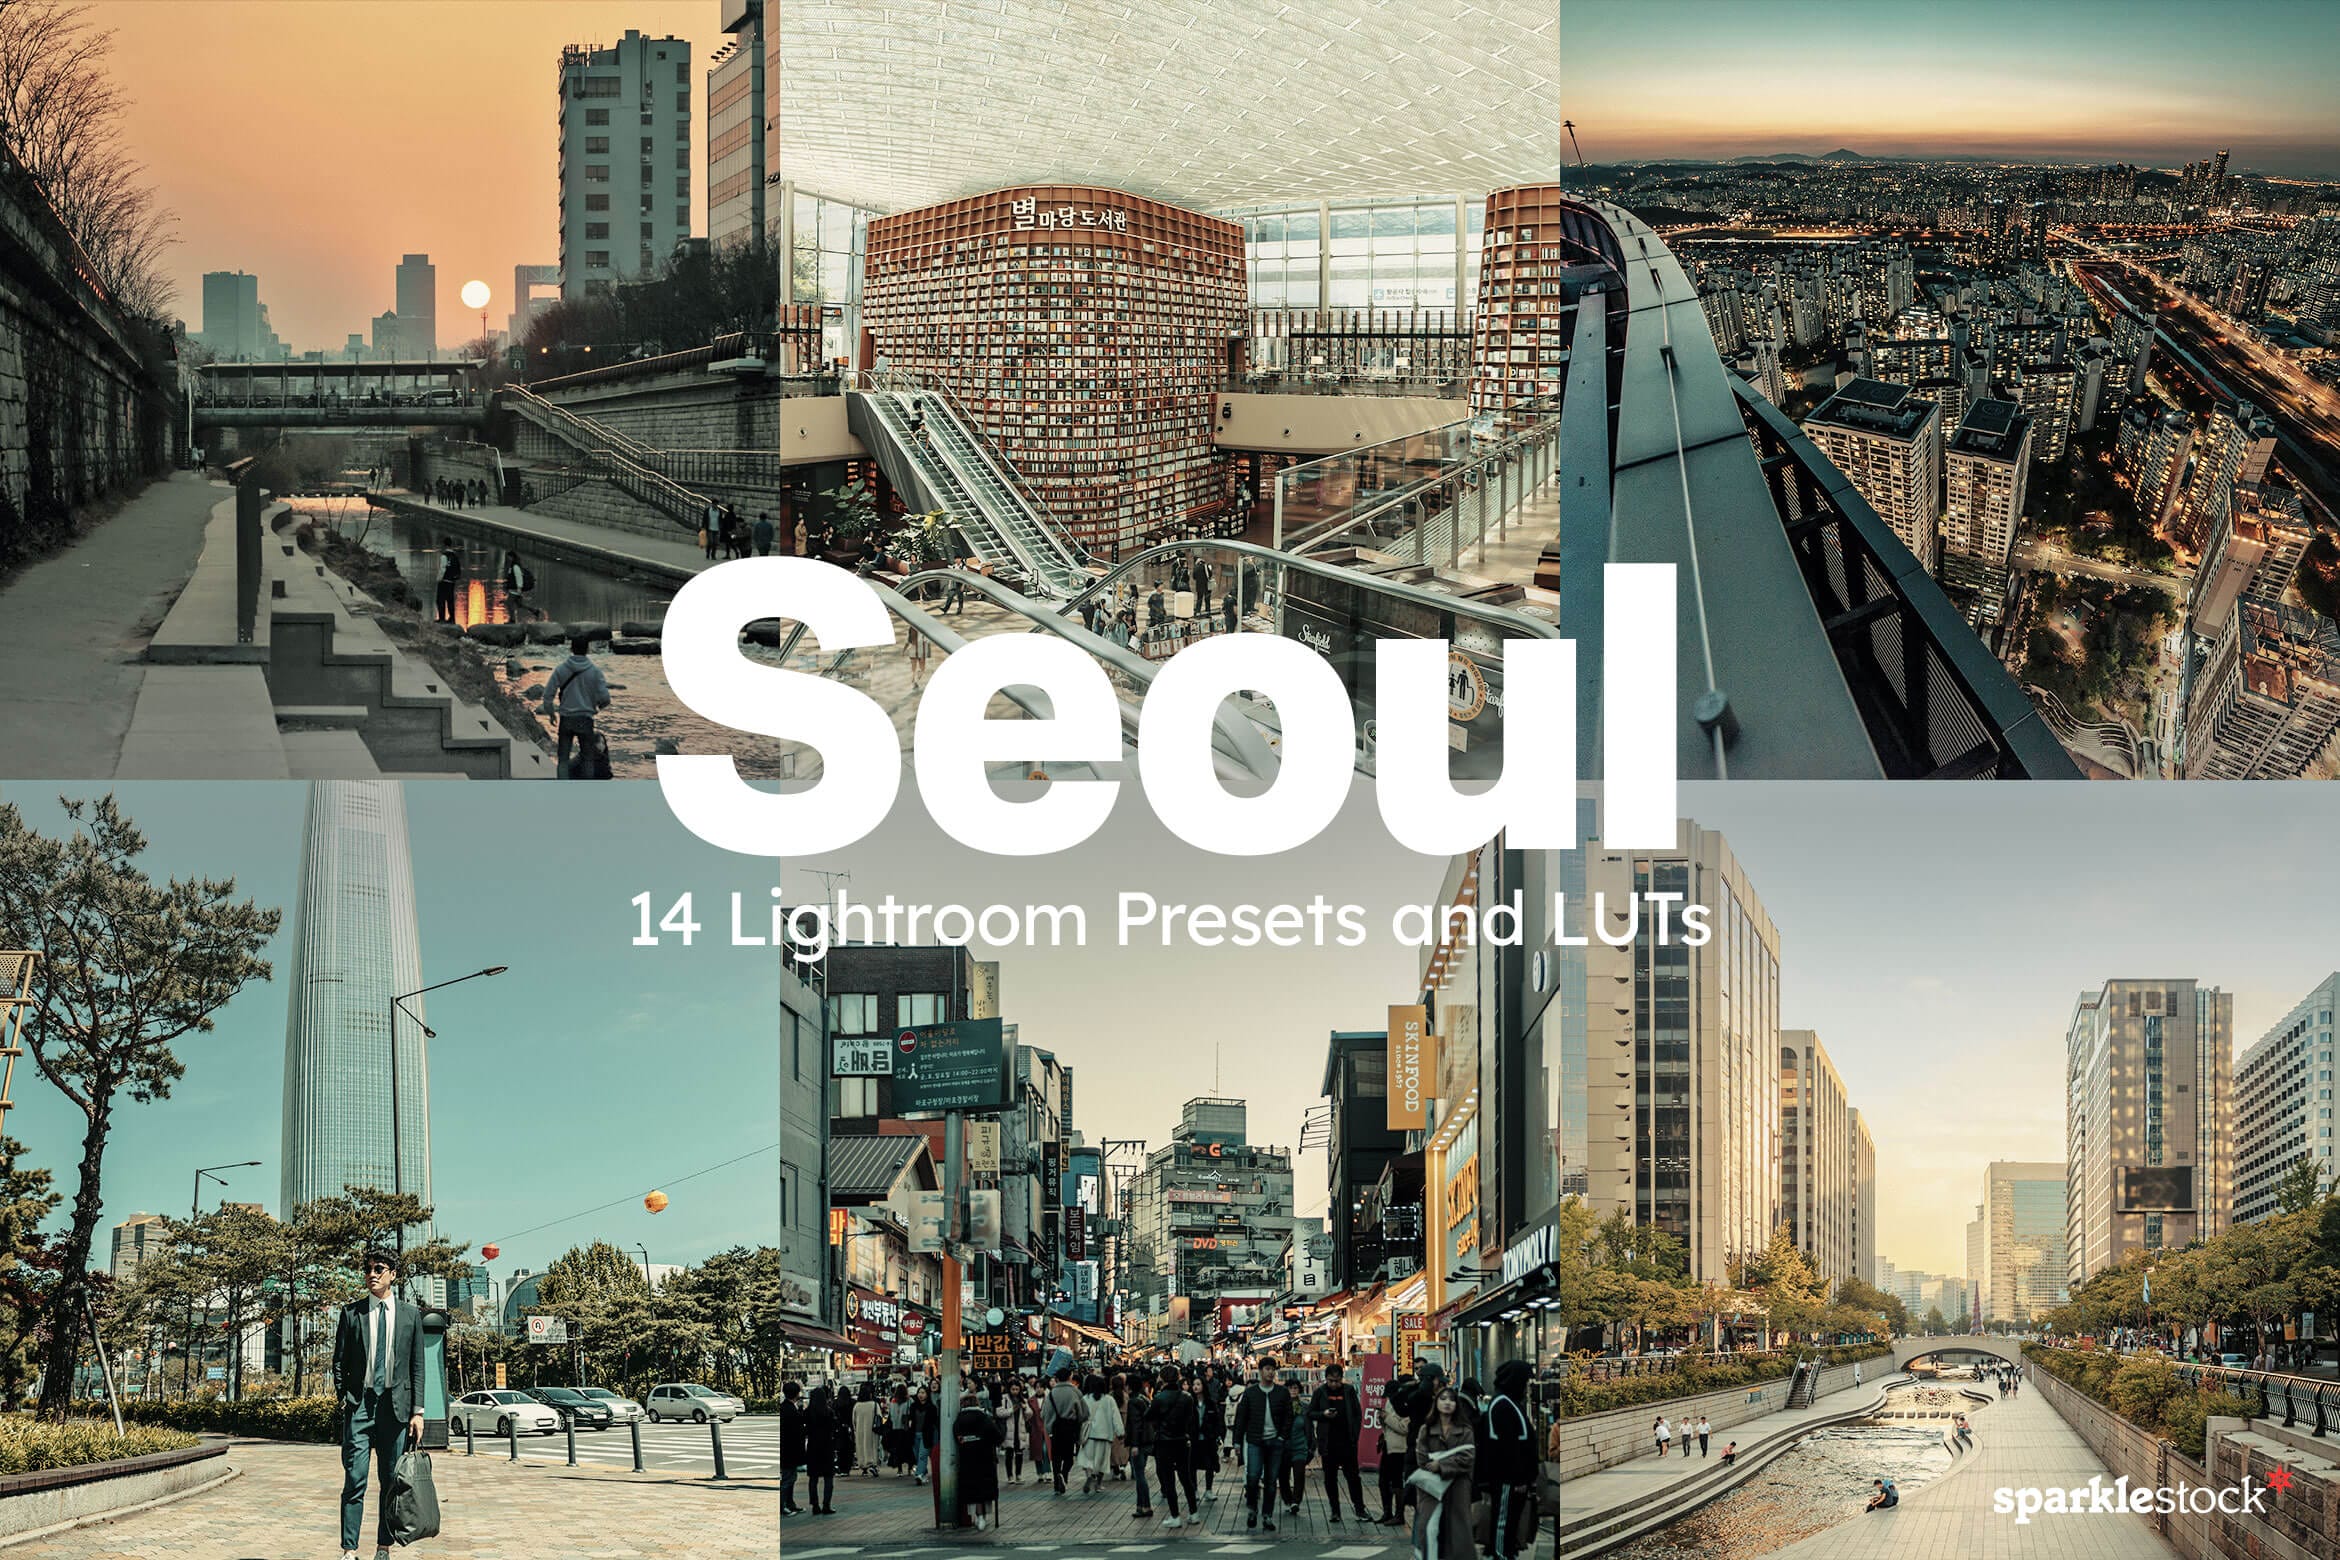 14 Seoul Lightroom Presets and LUTs